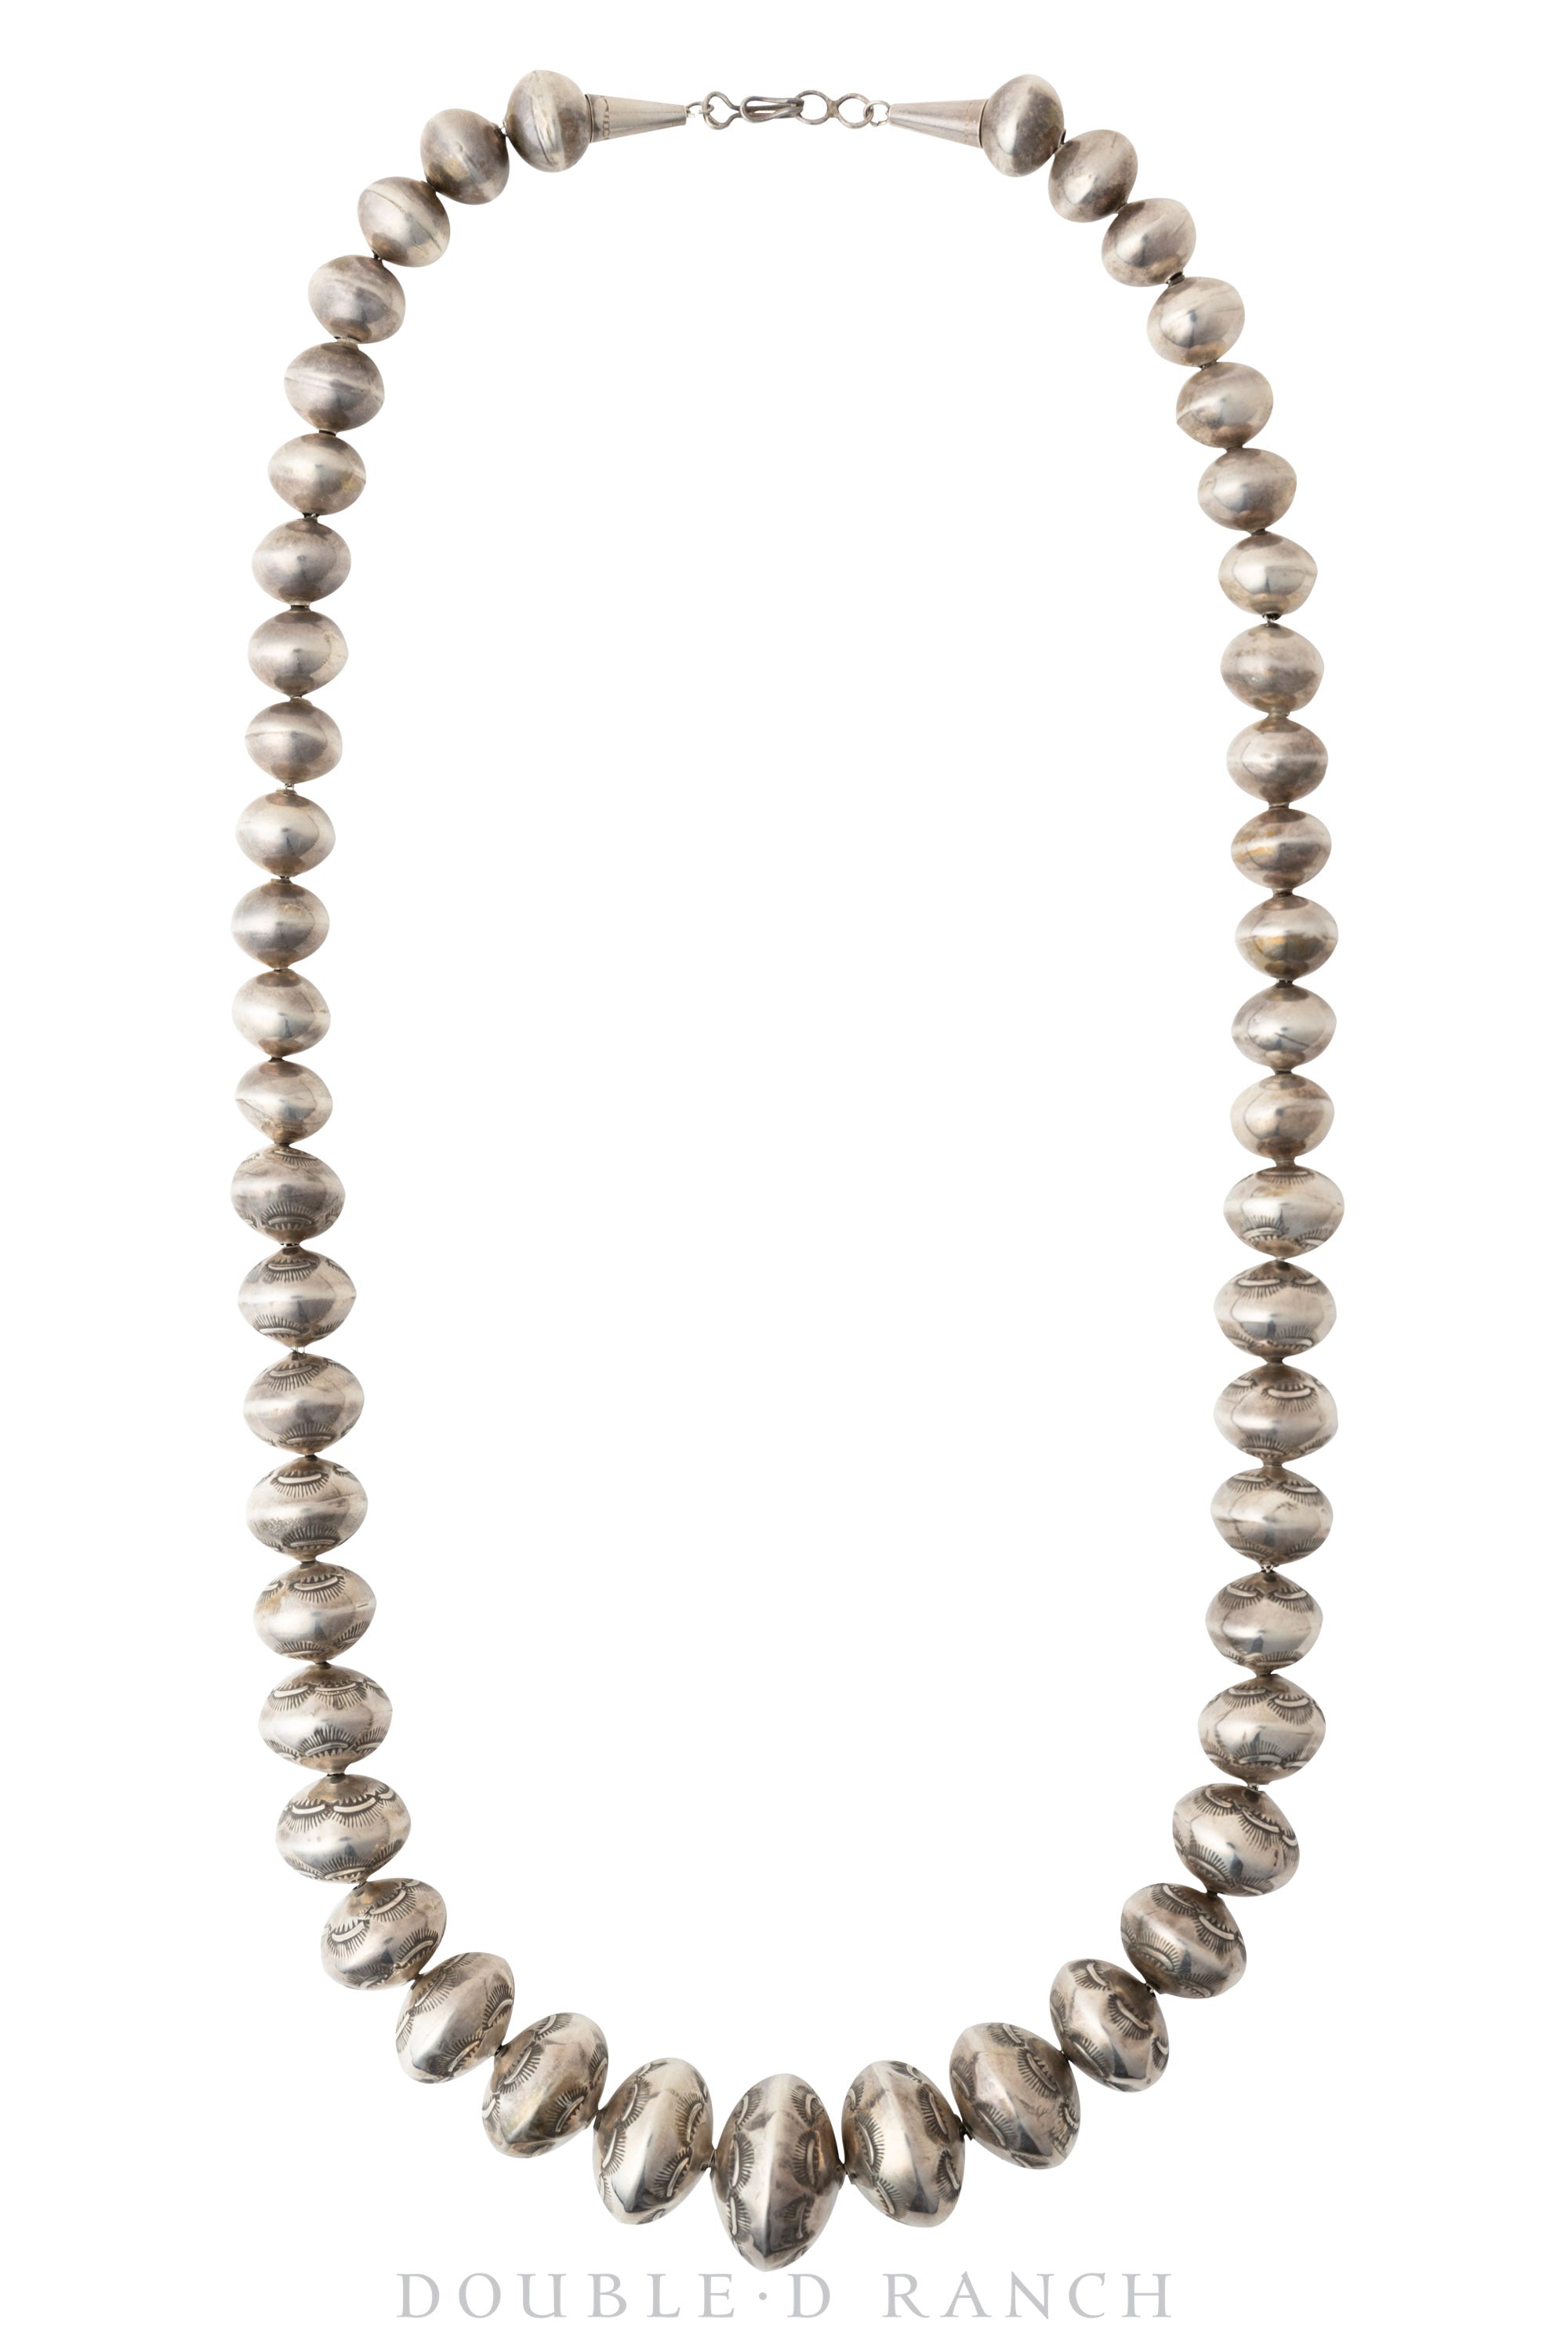 Necklace, Bead, Desert Pearls, Stamped, Vintage ‘60s, 1698